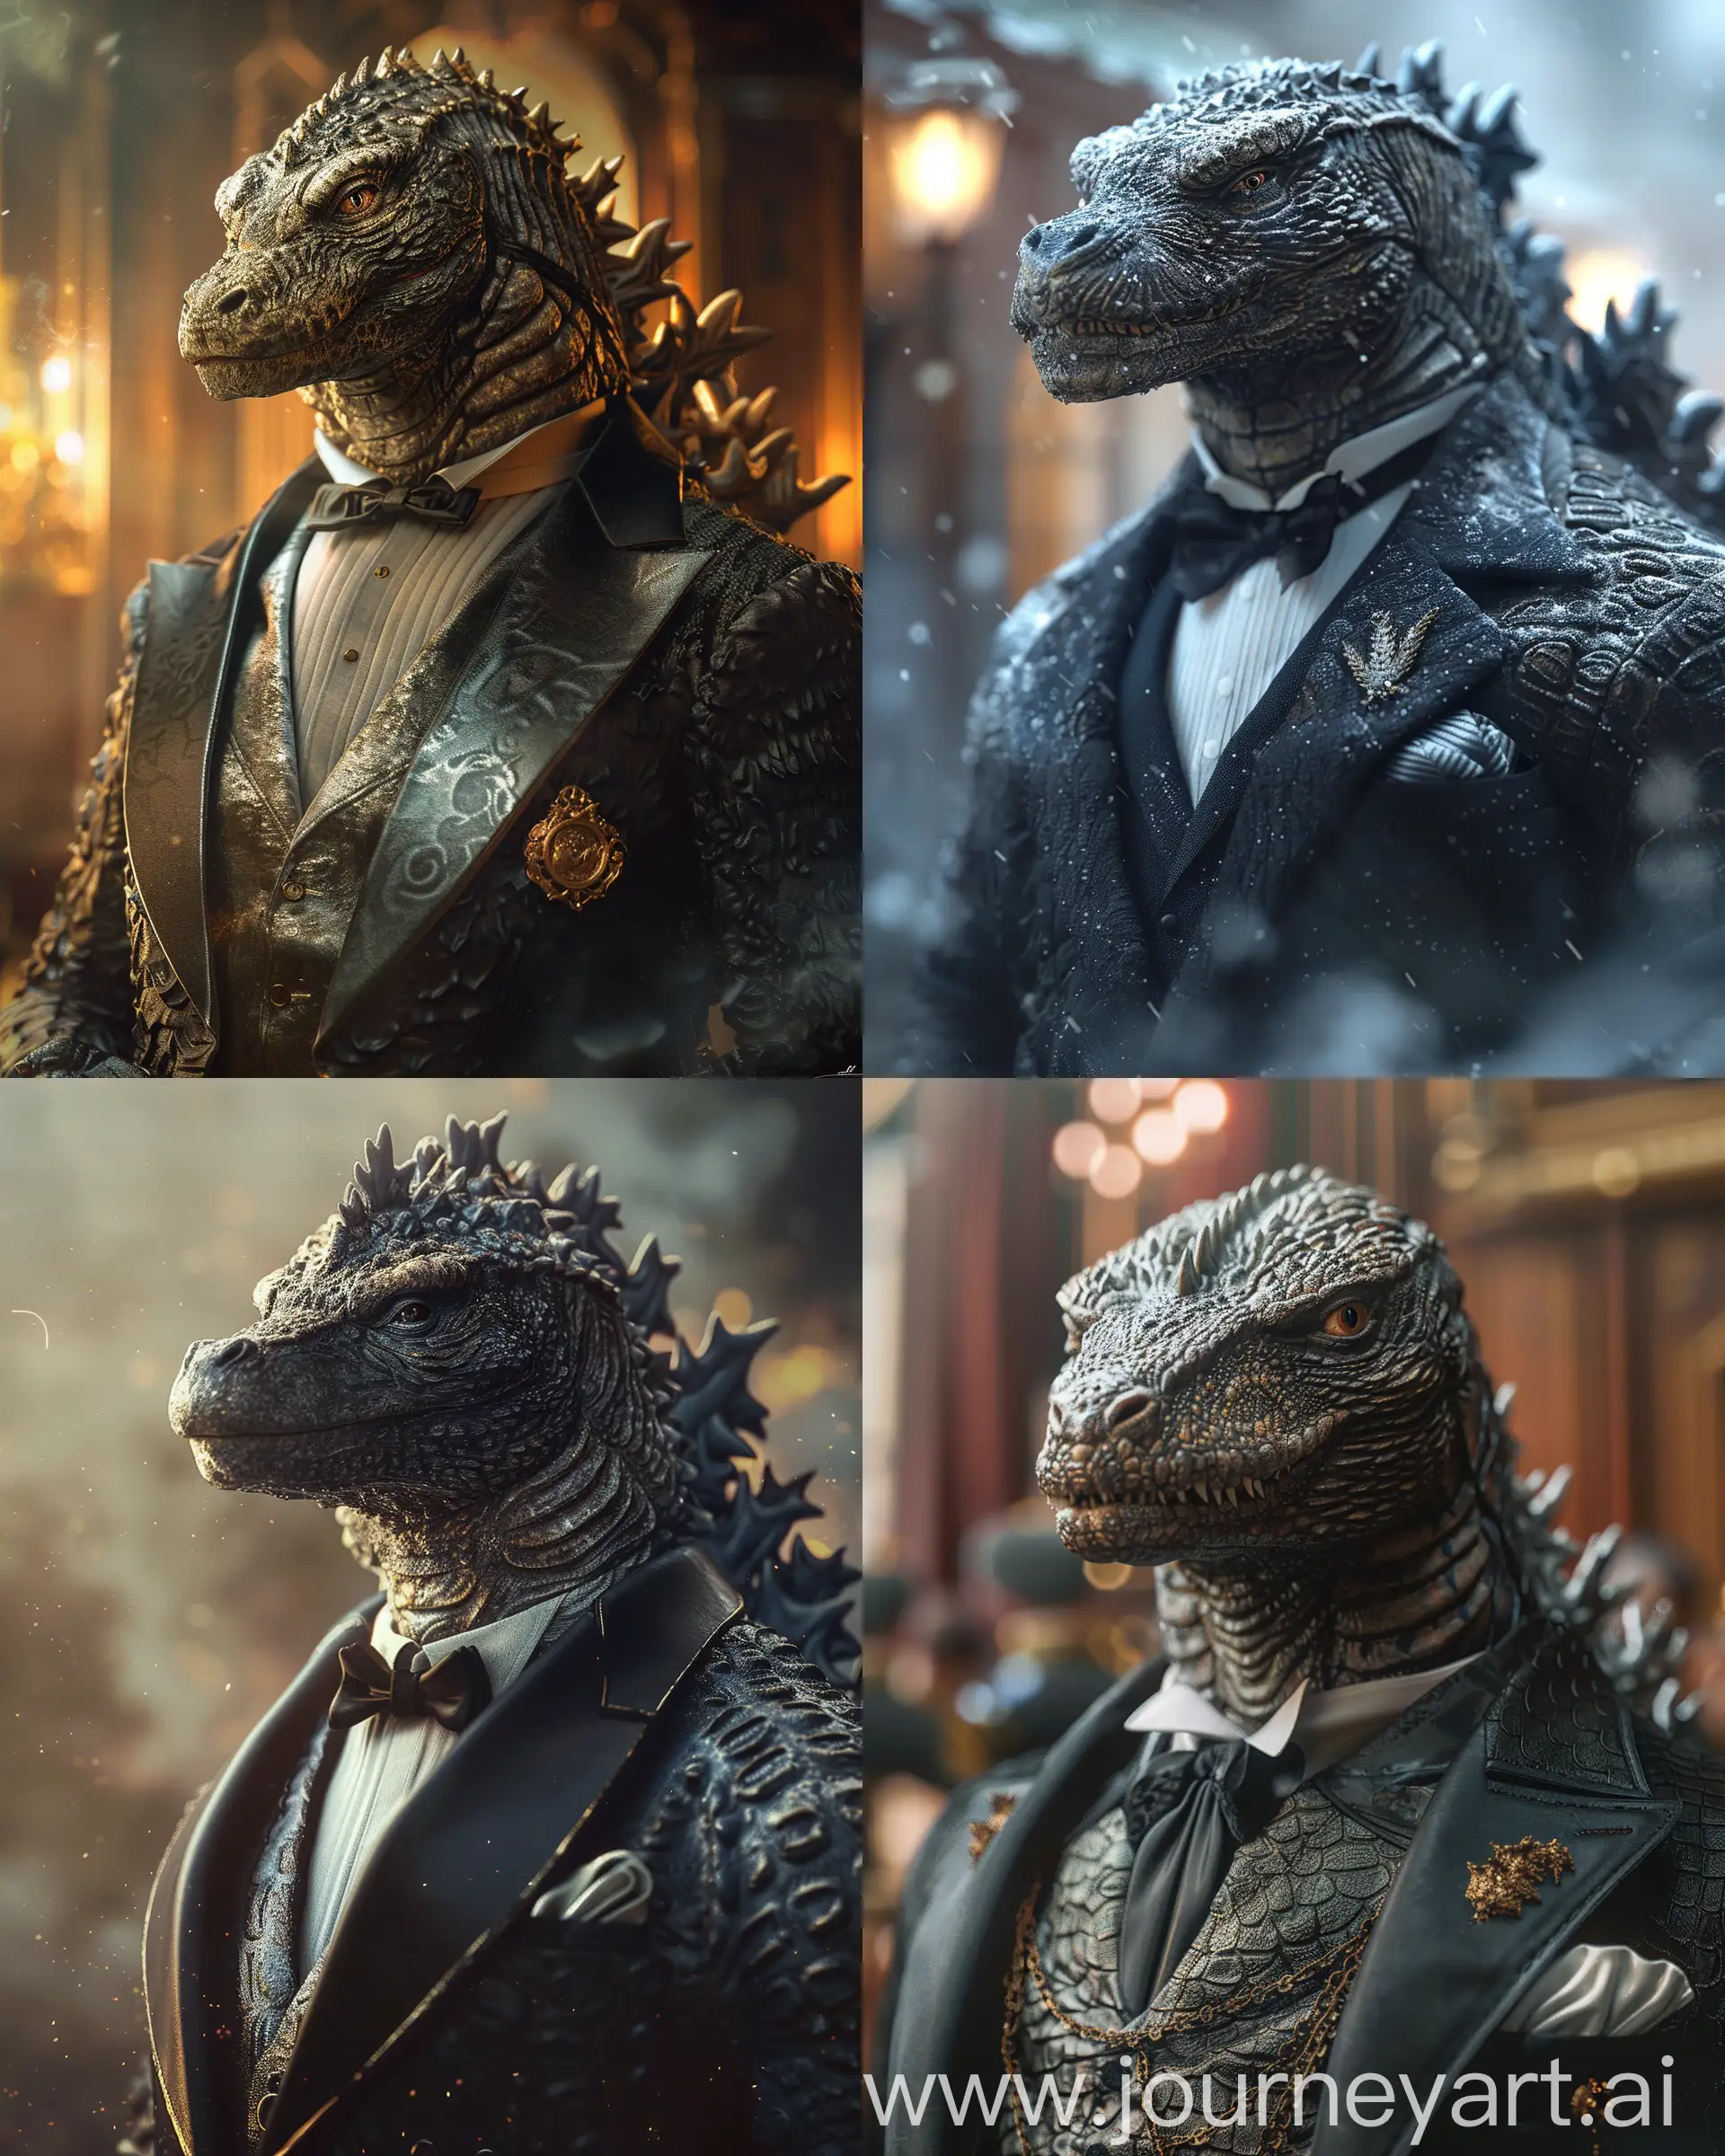 Godzilla-in-Tuxedo-A-Charming-Prince-in-Hyperdetailed-Fantasy-Art